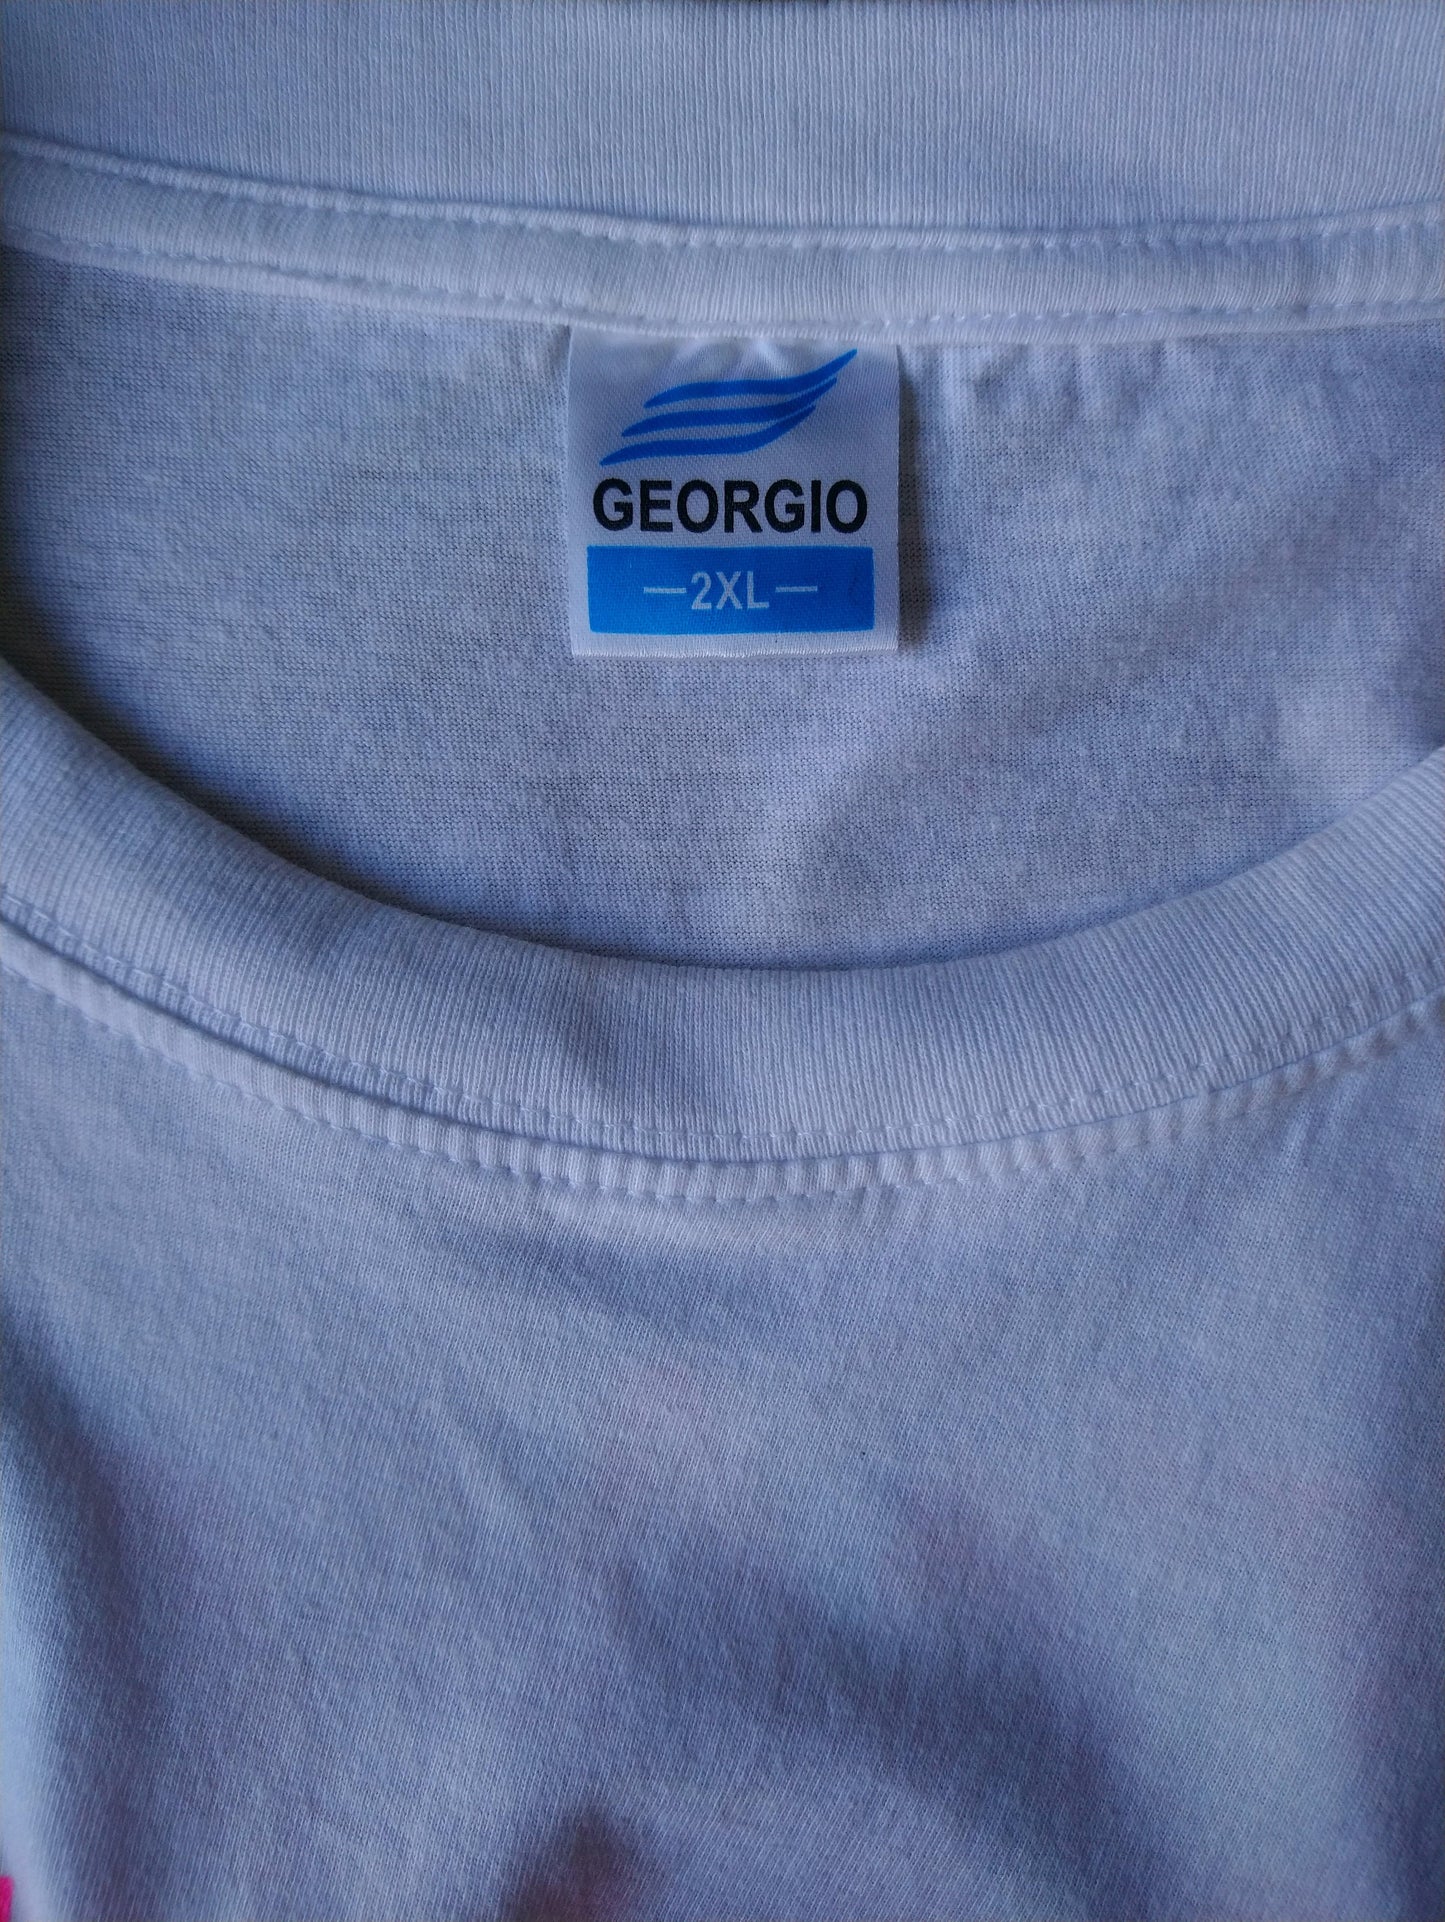 Georgio Shirt Napa. Blanc avec imprimé. Taille xxl.